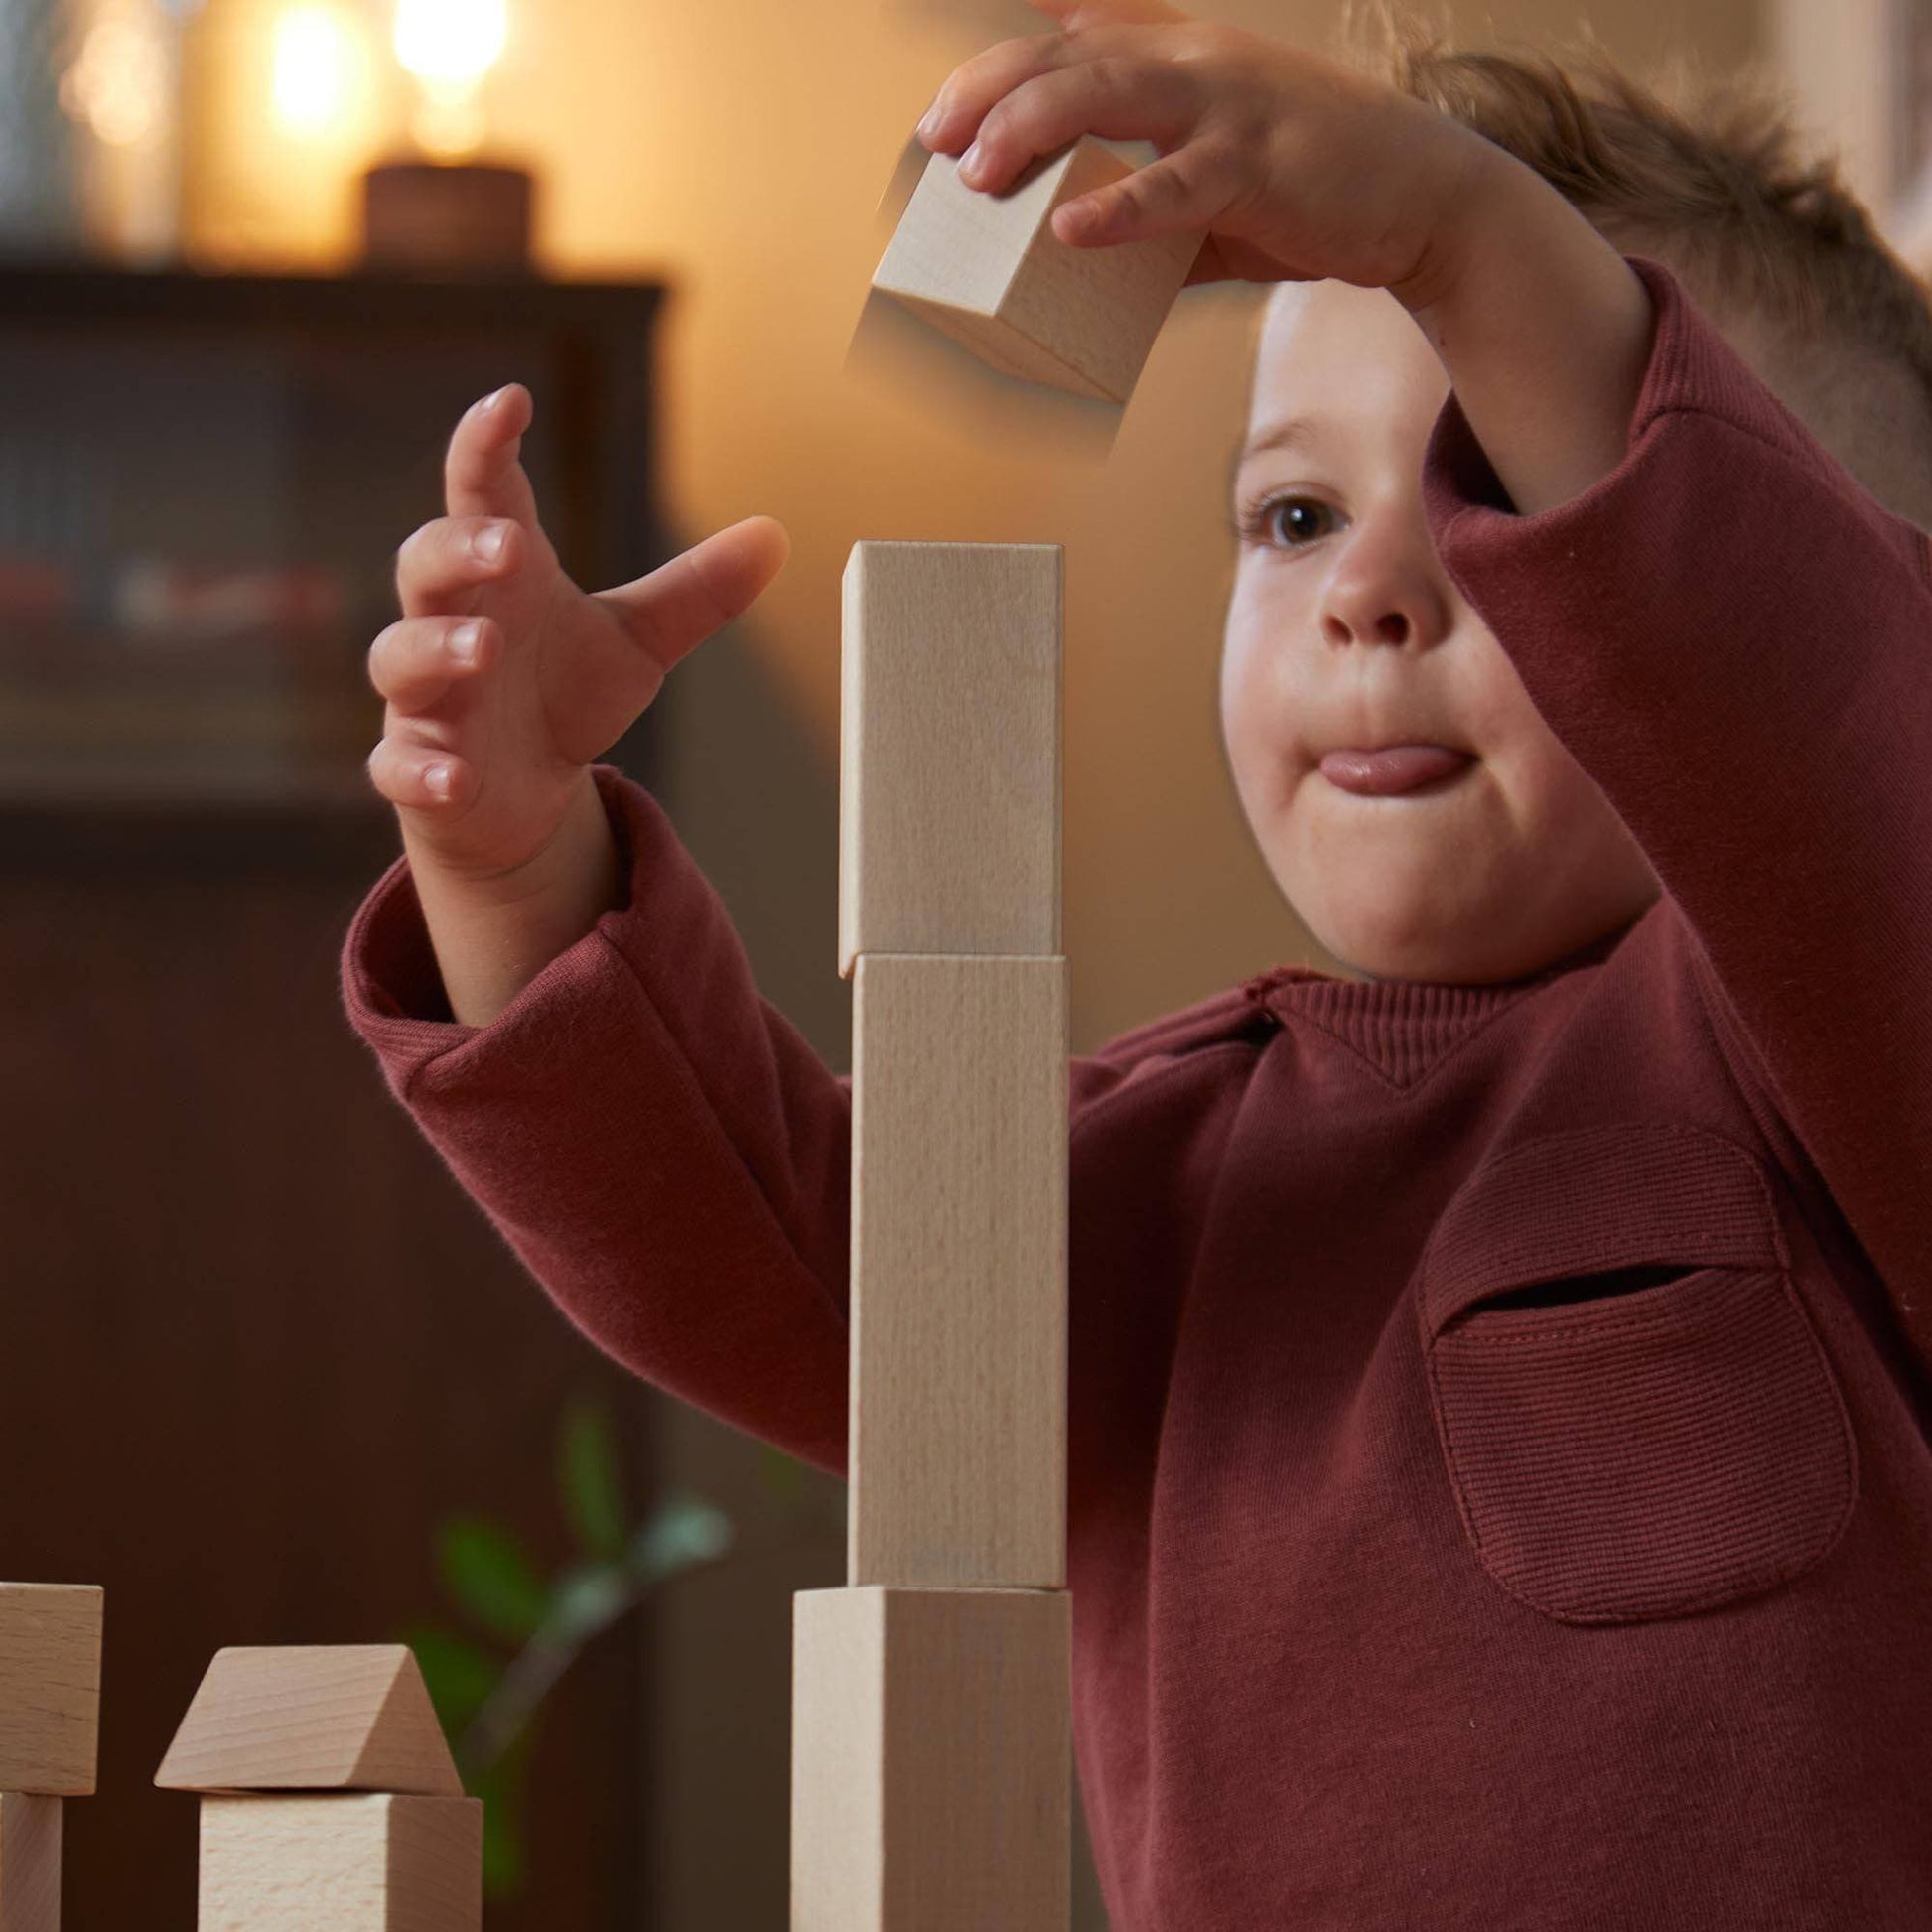 Toddler Basic Building Blocks 26 Piece Starter Set by Haba